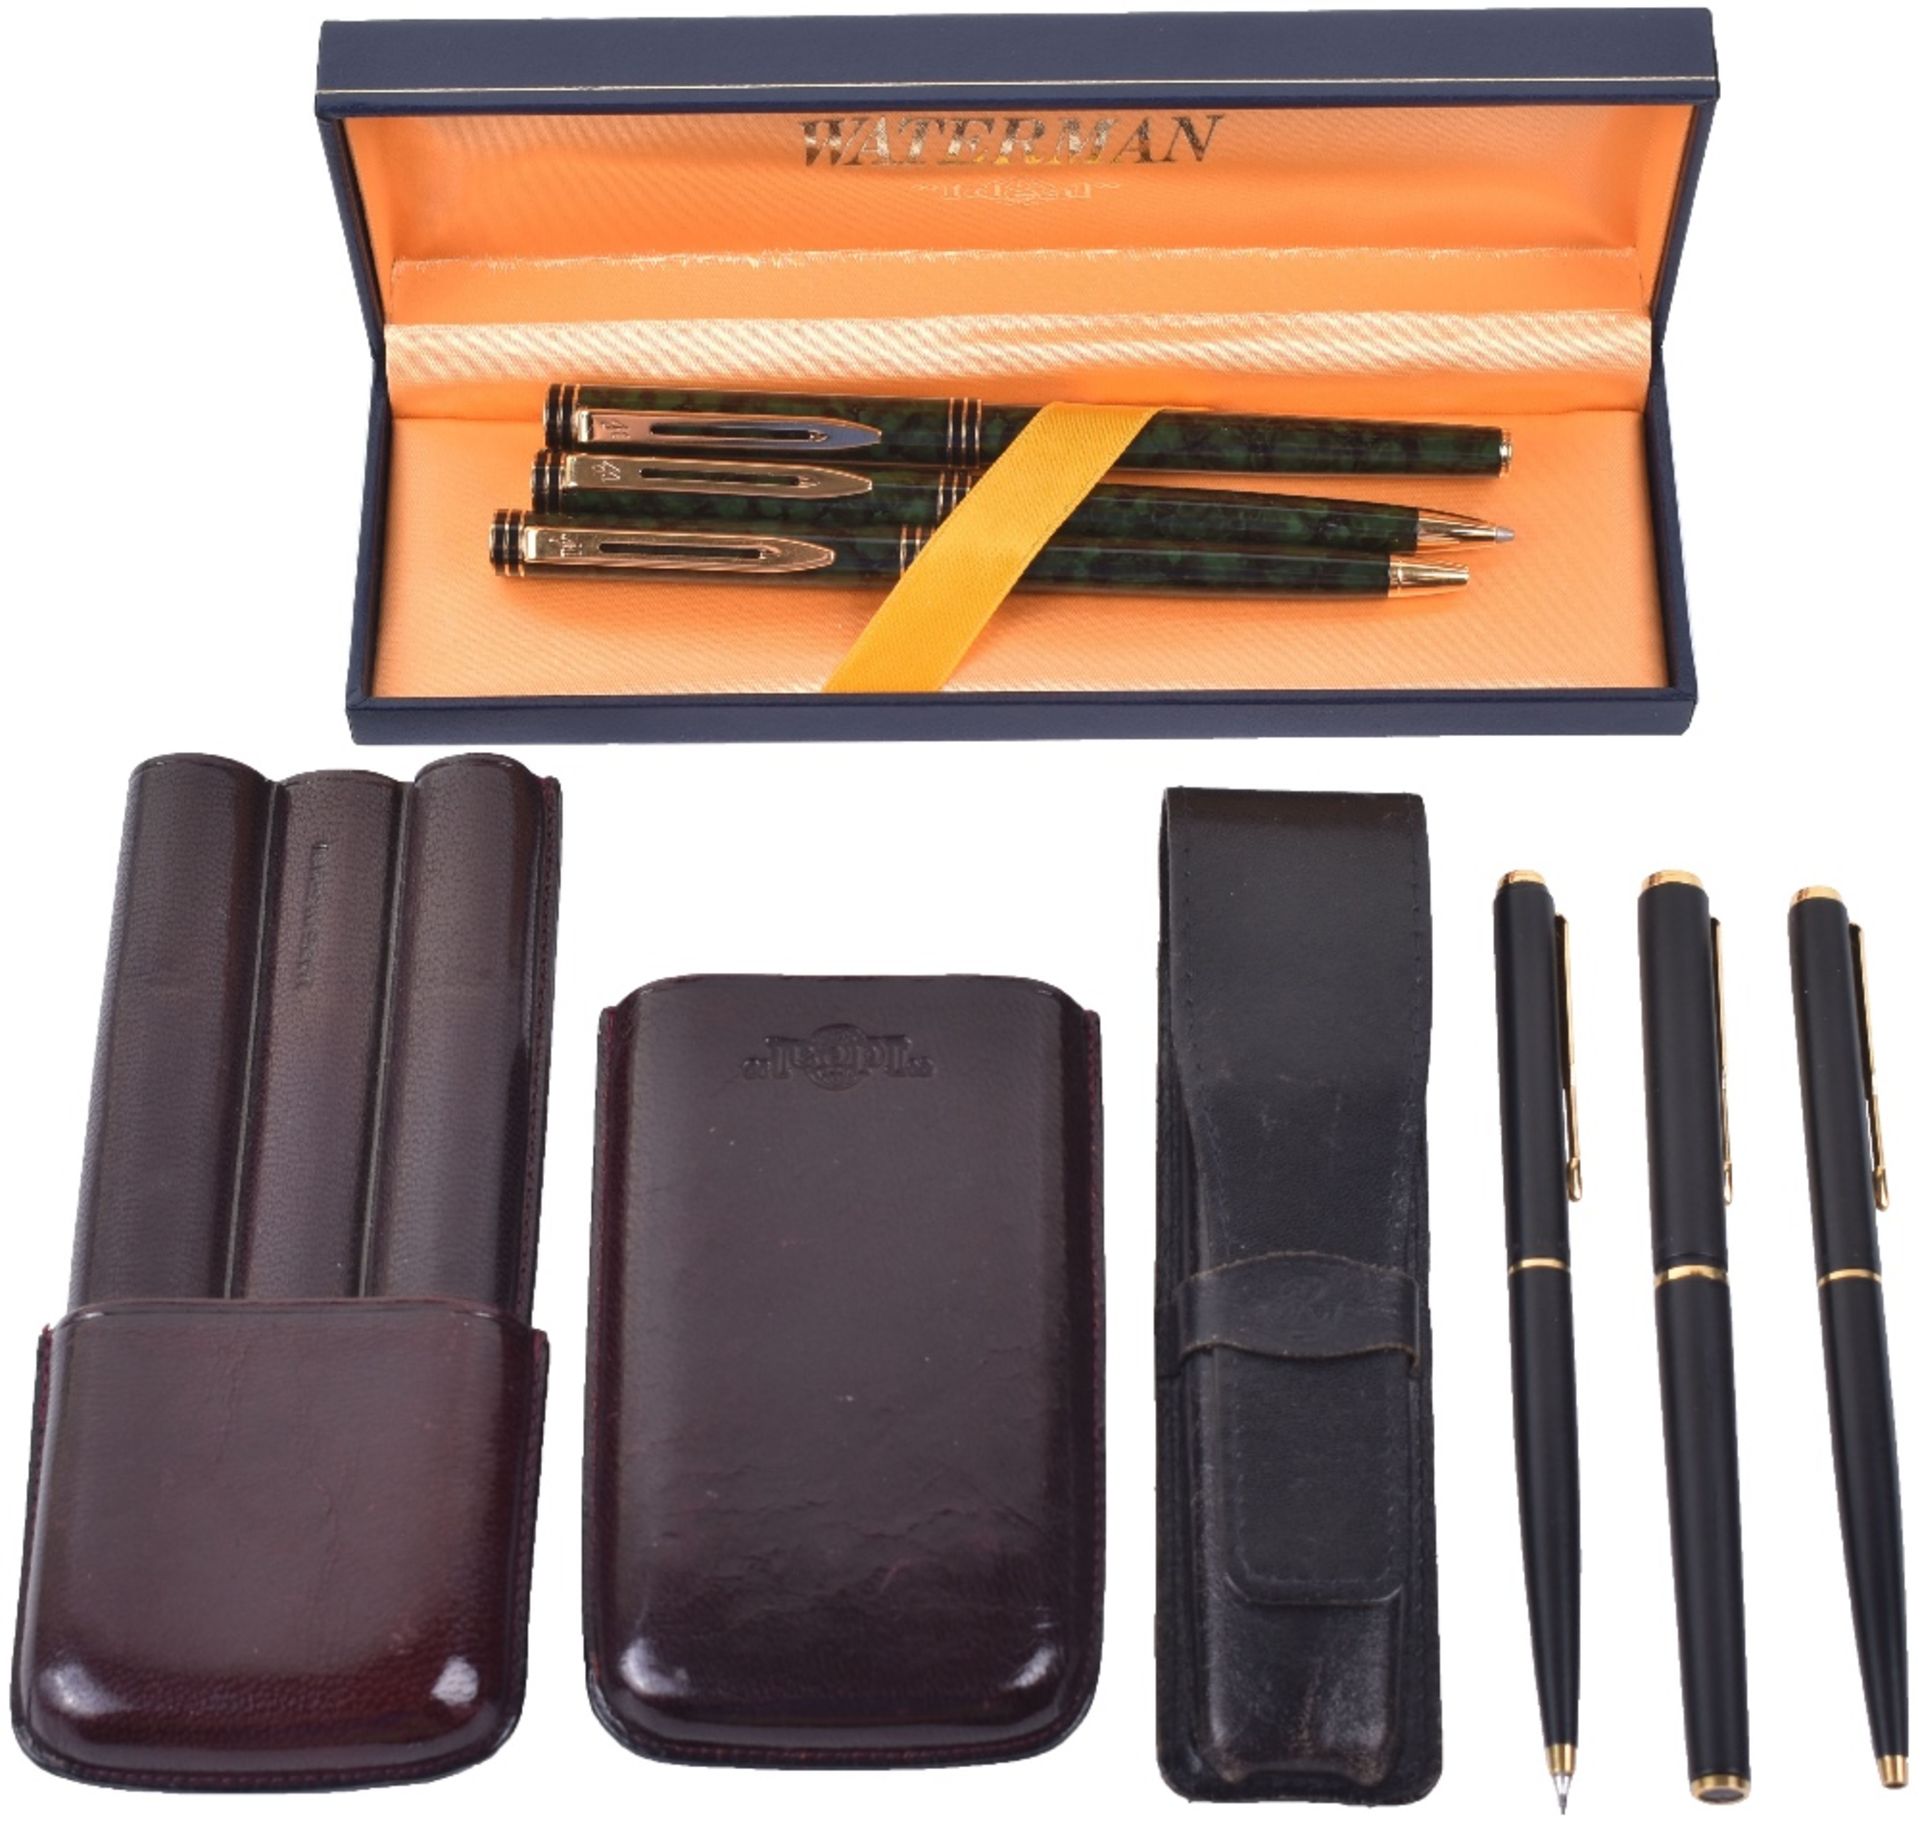 A set of three Waterman Ideal pens